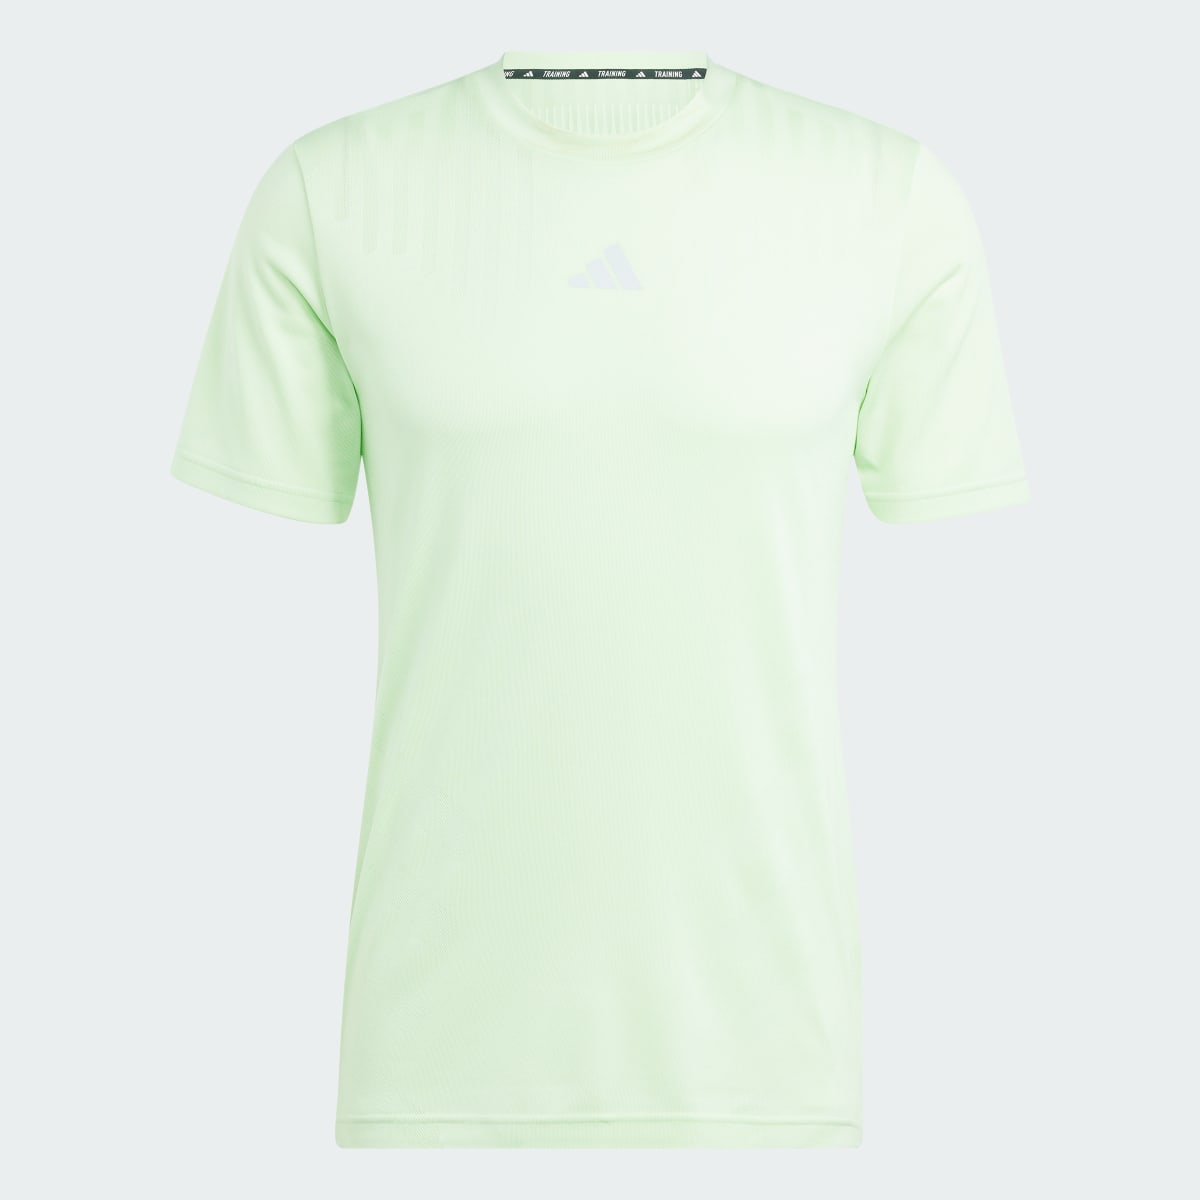 Adidas Koszulka HIIT Airchill Workout. 5